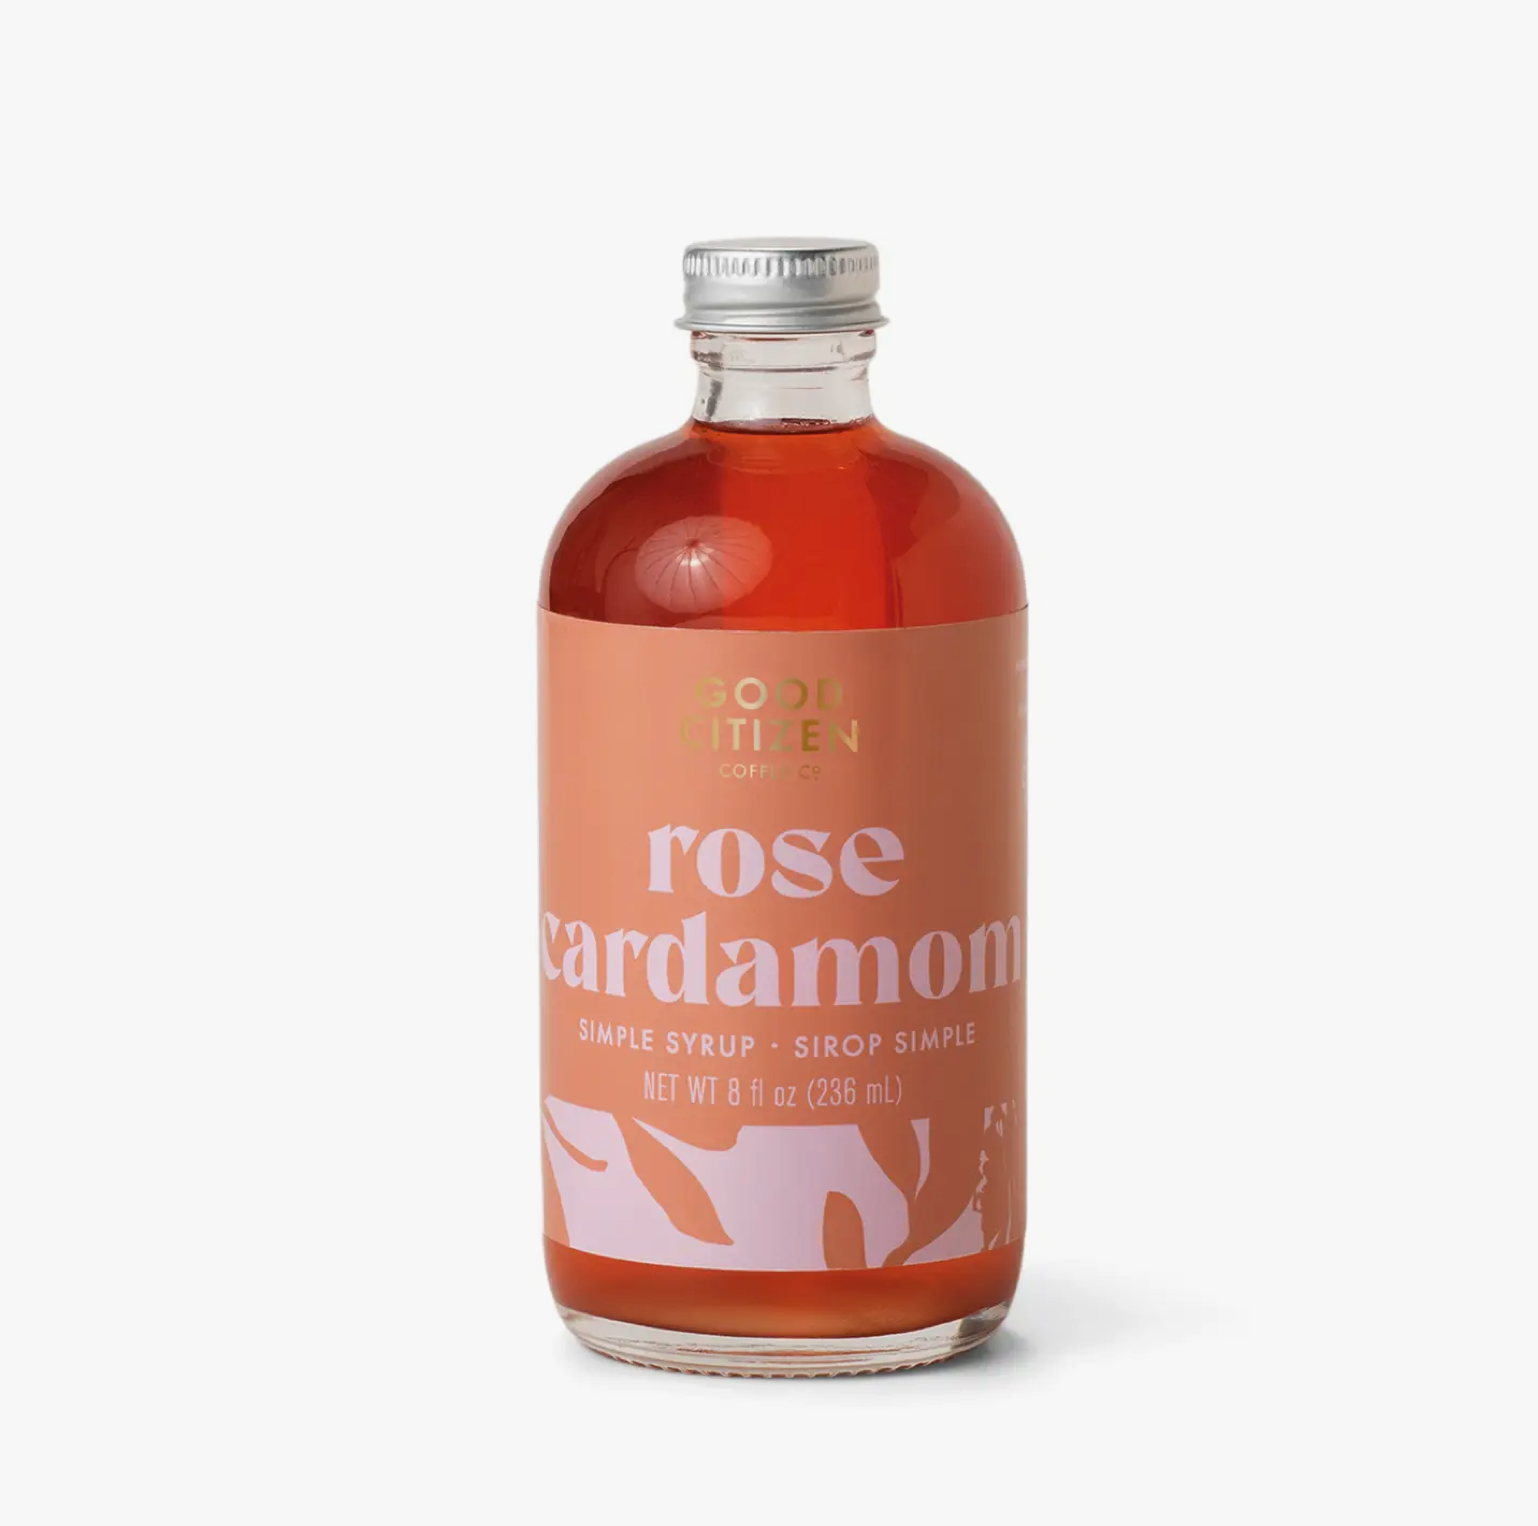 Simple Syrup - Rose Cardamom